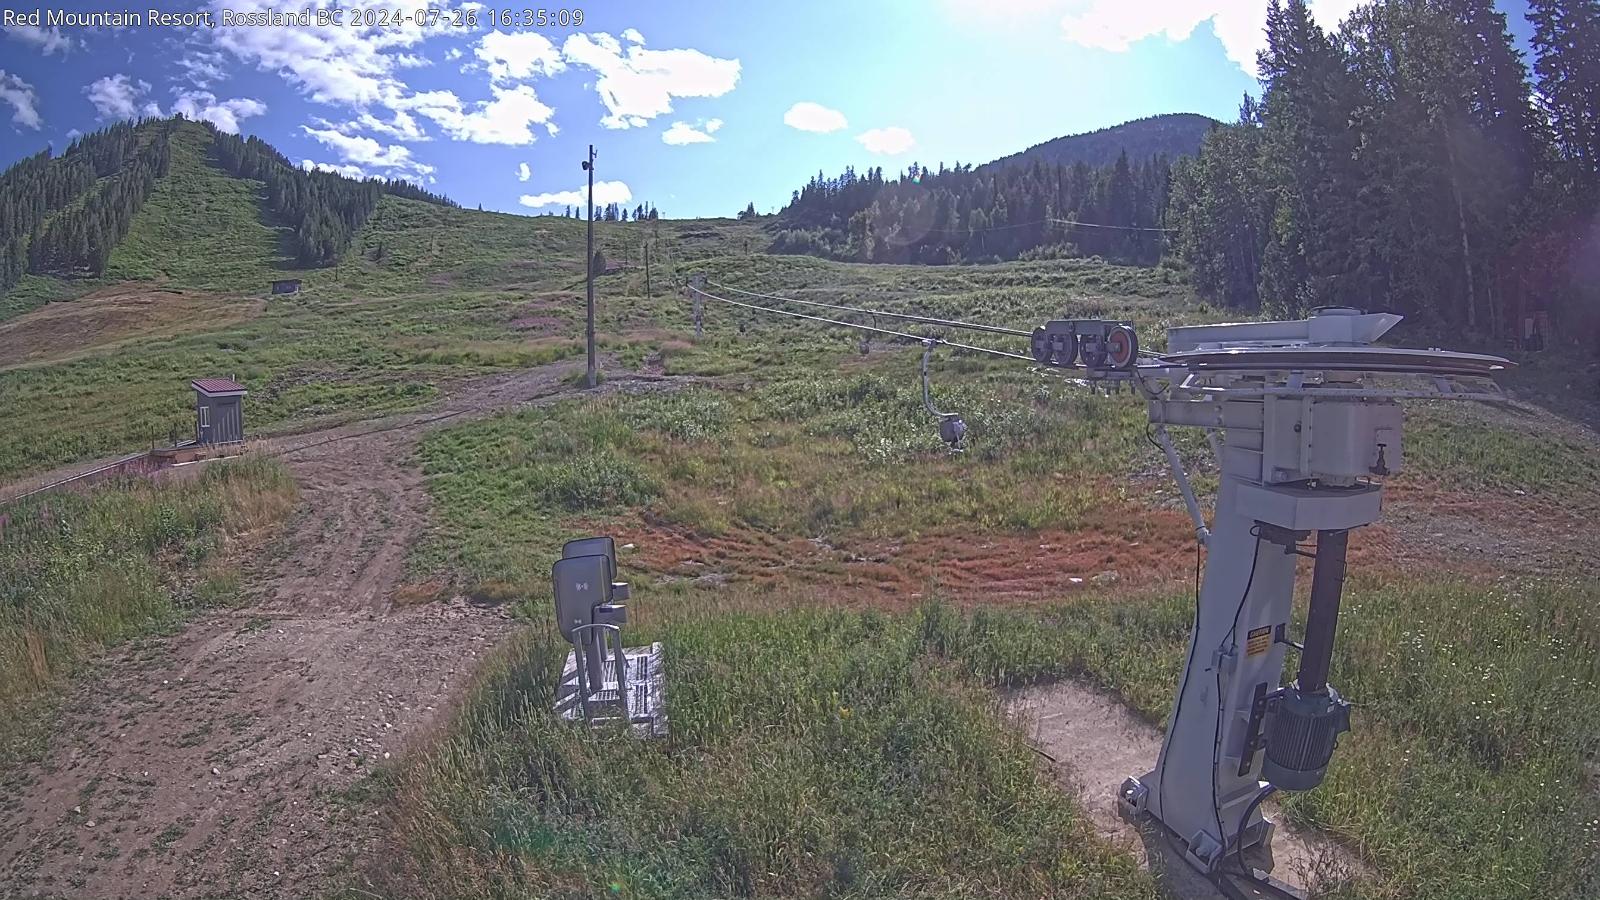 Webcam Red Mountain: Terrain Park